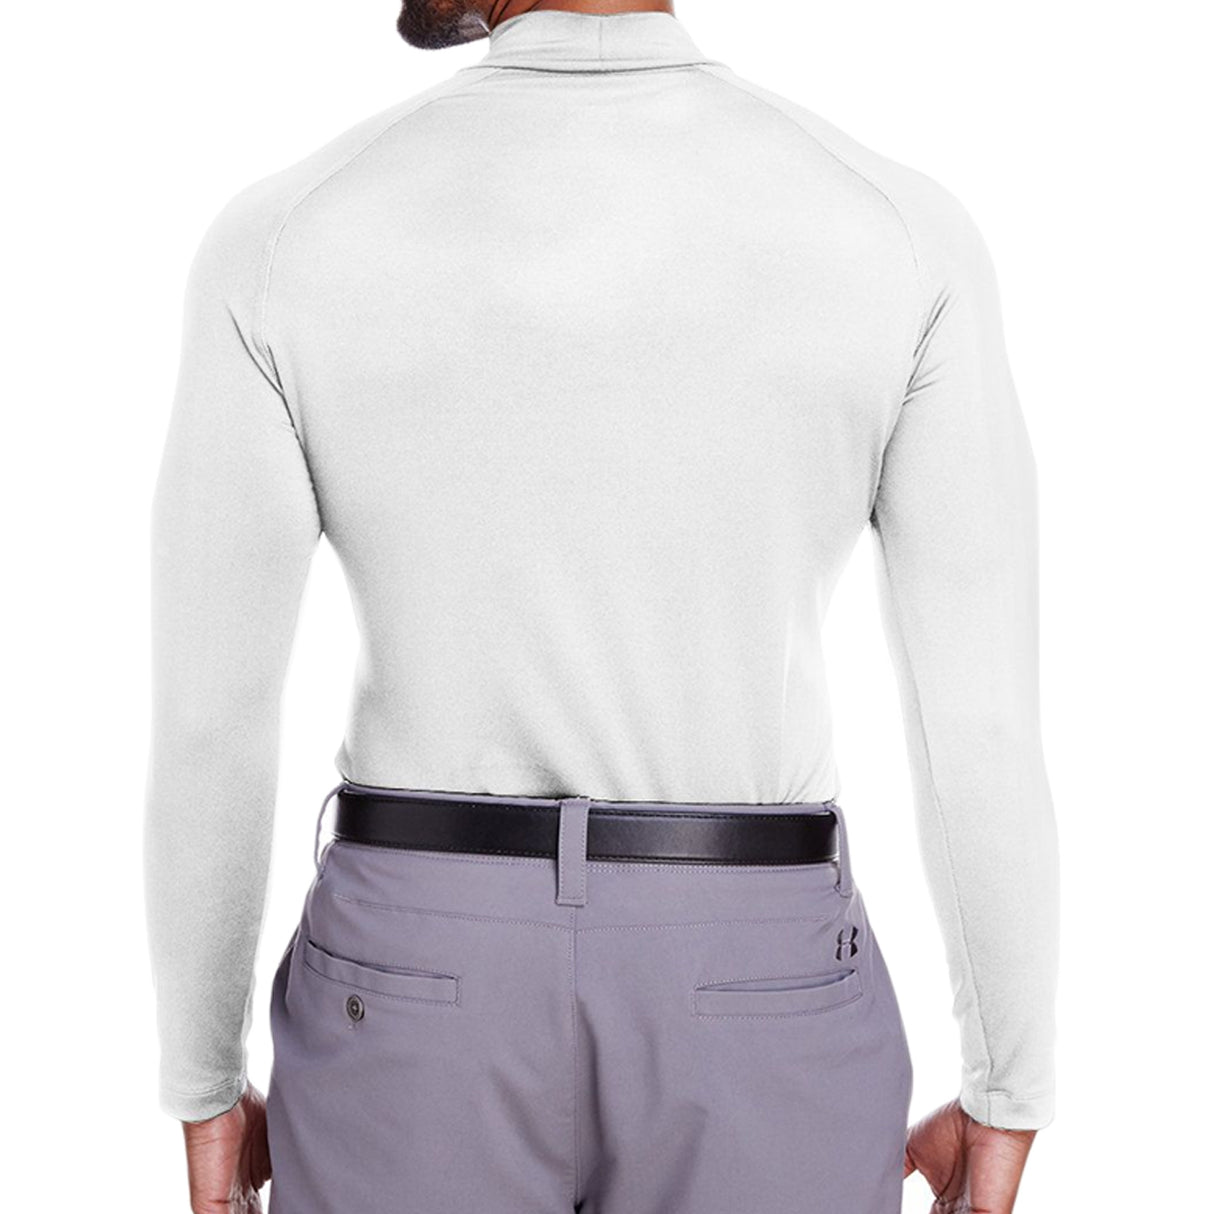 Puma Golf Men's Longsleeve Mock Neck Base Layer Shirt